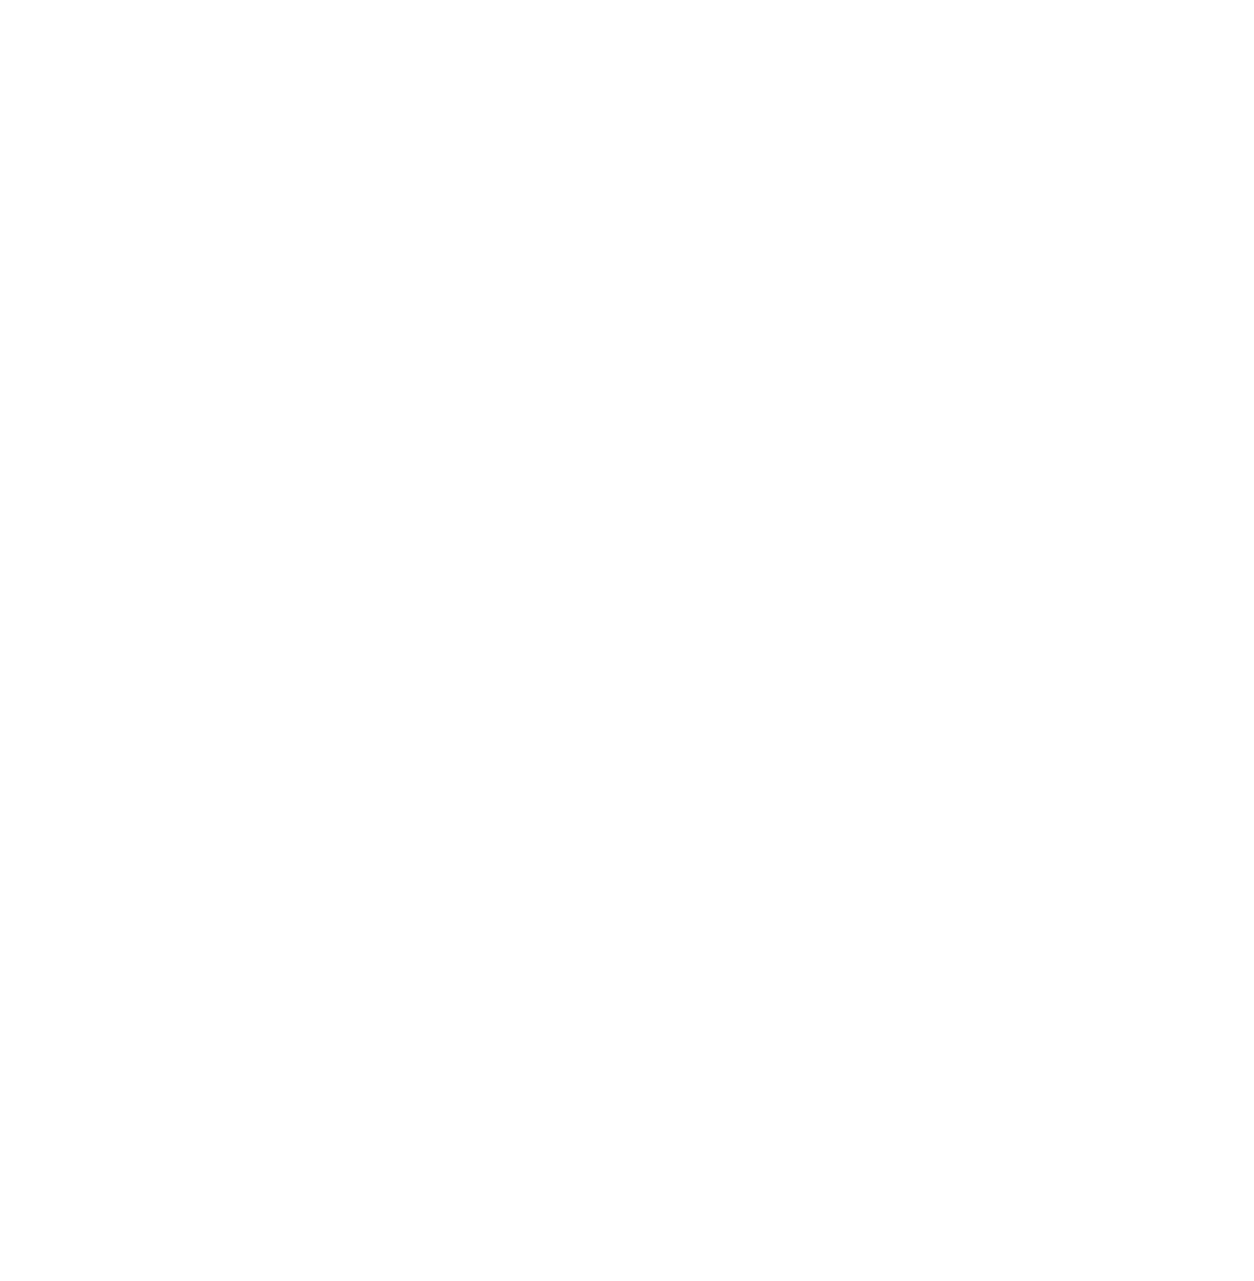 Flores Life Coaching